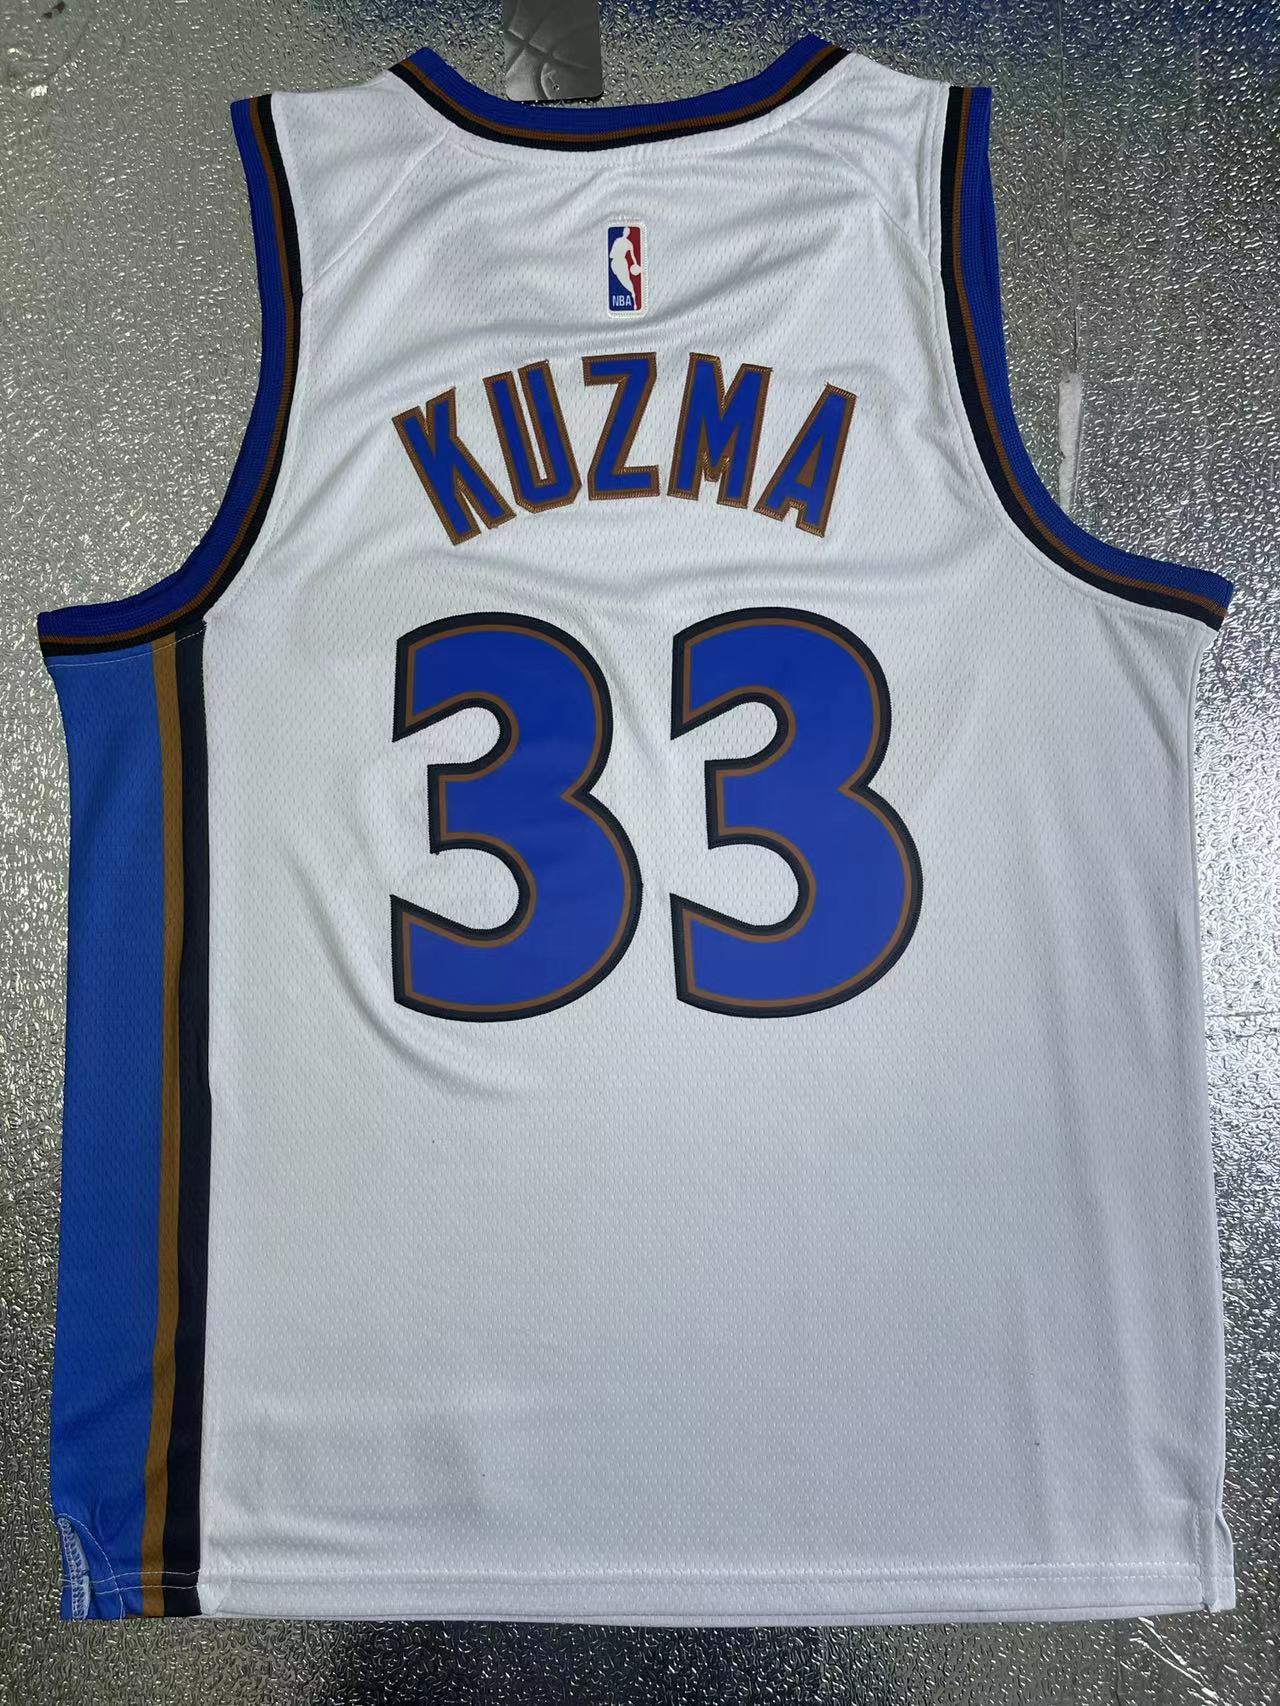 Washington Wizards 33 Kyle Kuzma jersey city basketball uniform